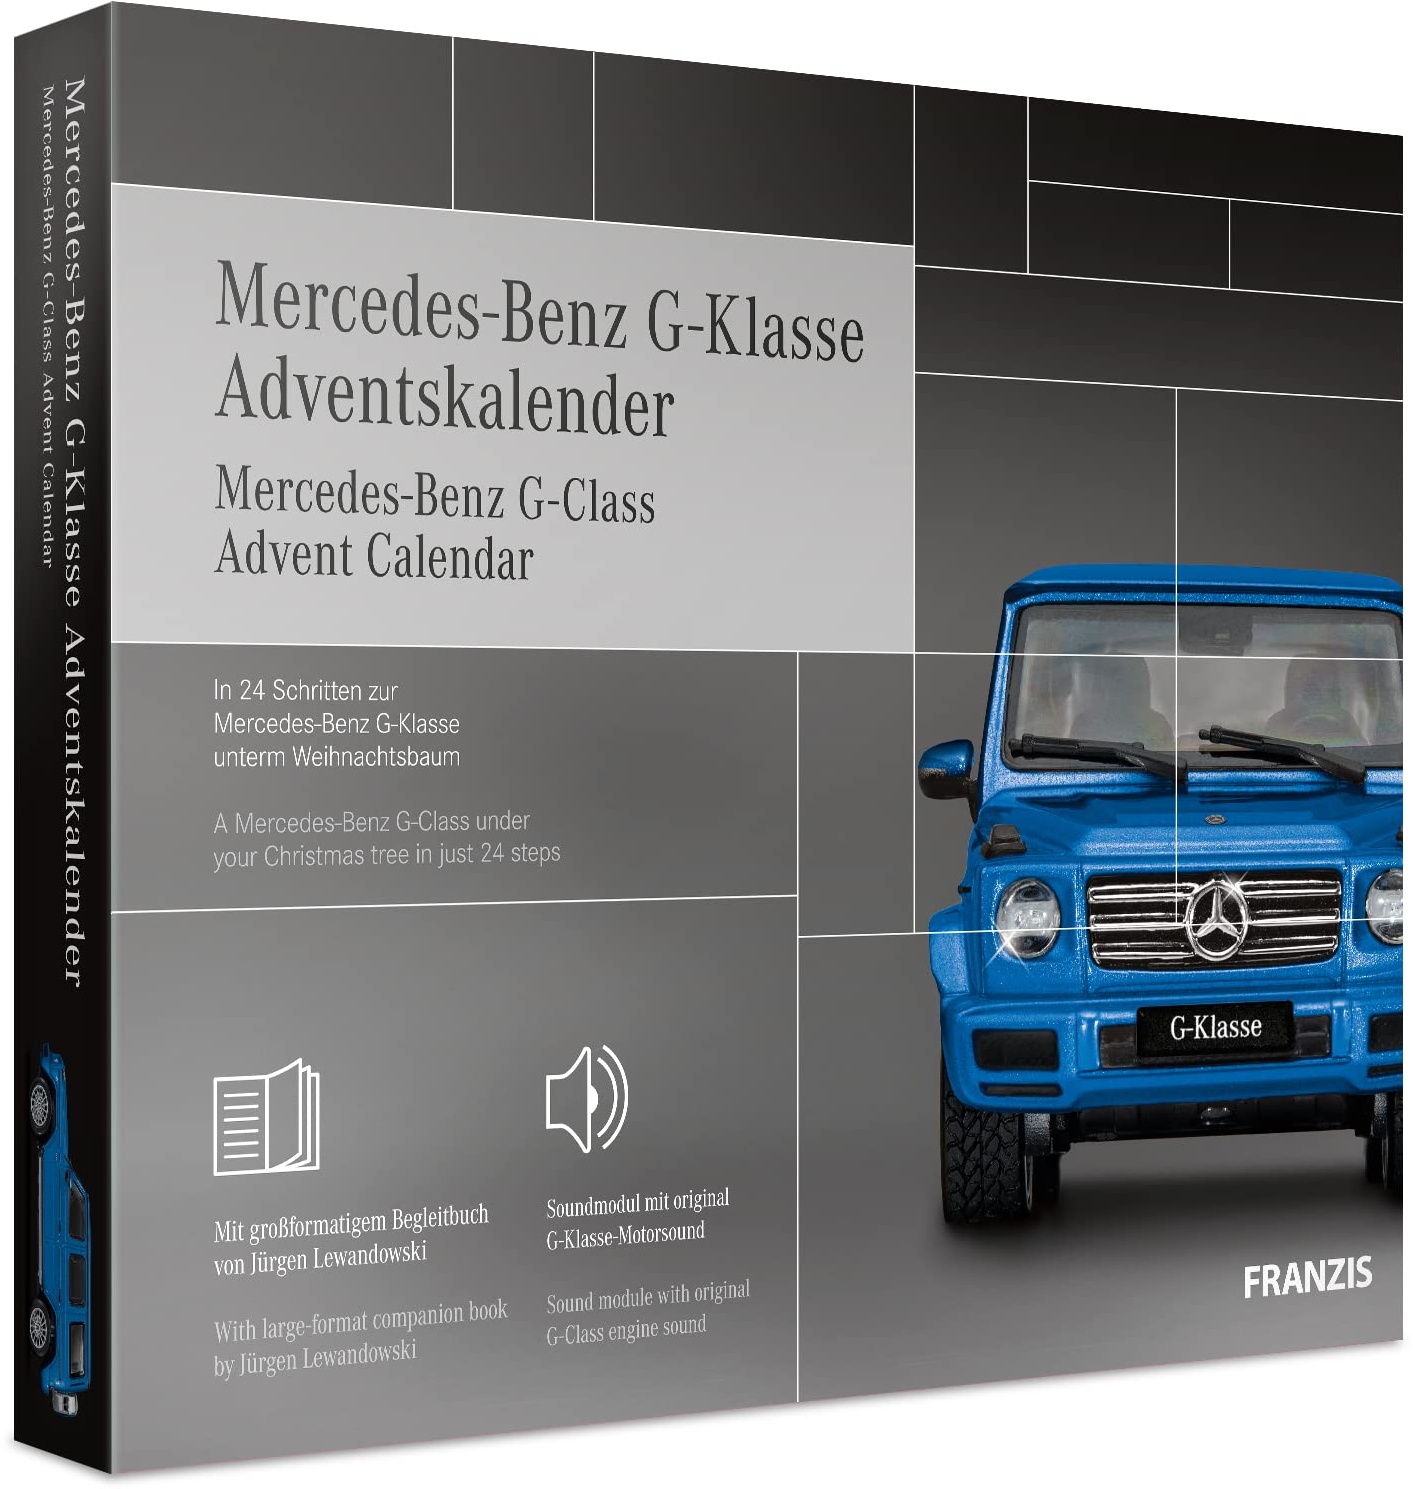 Franzis Mercedes Benz G-Klasse Adventskalender